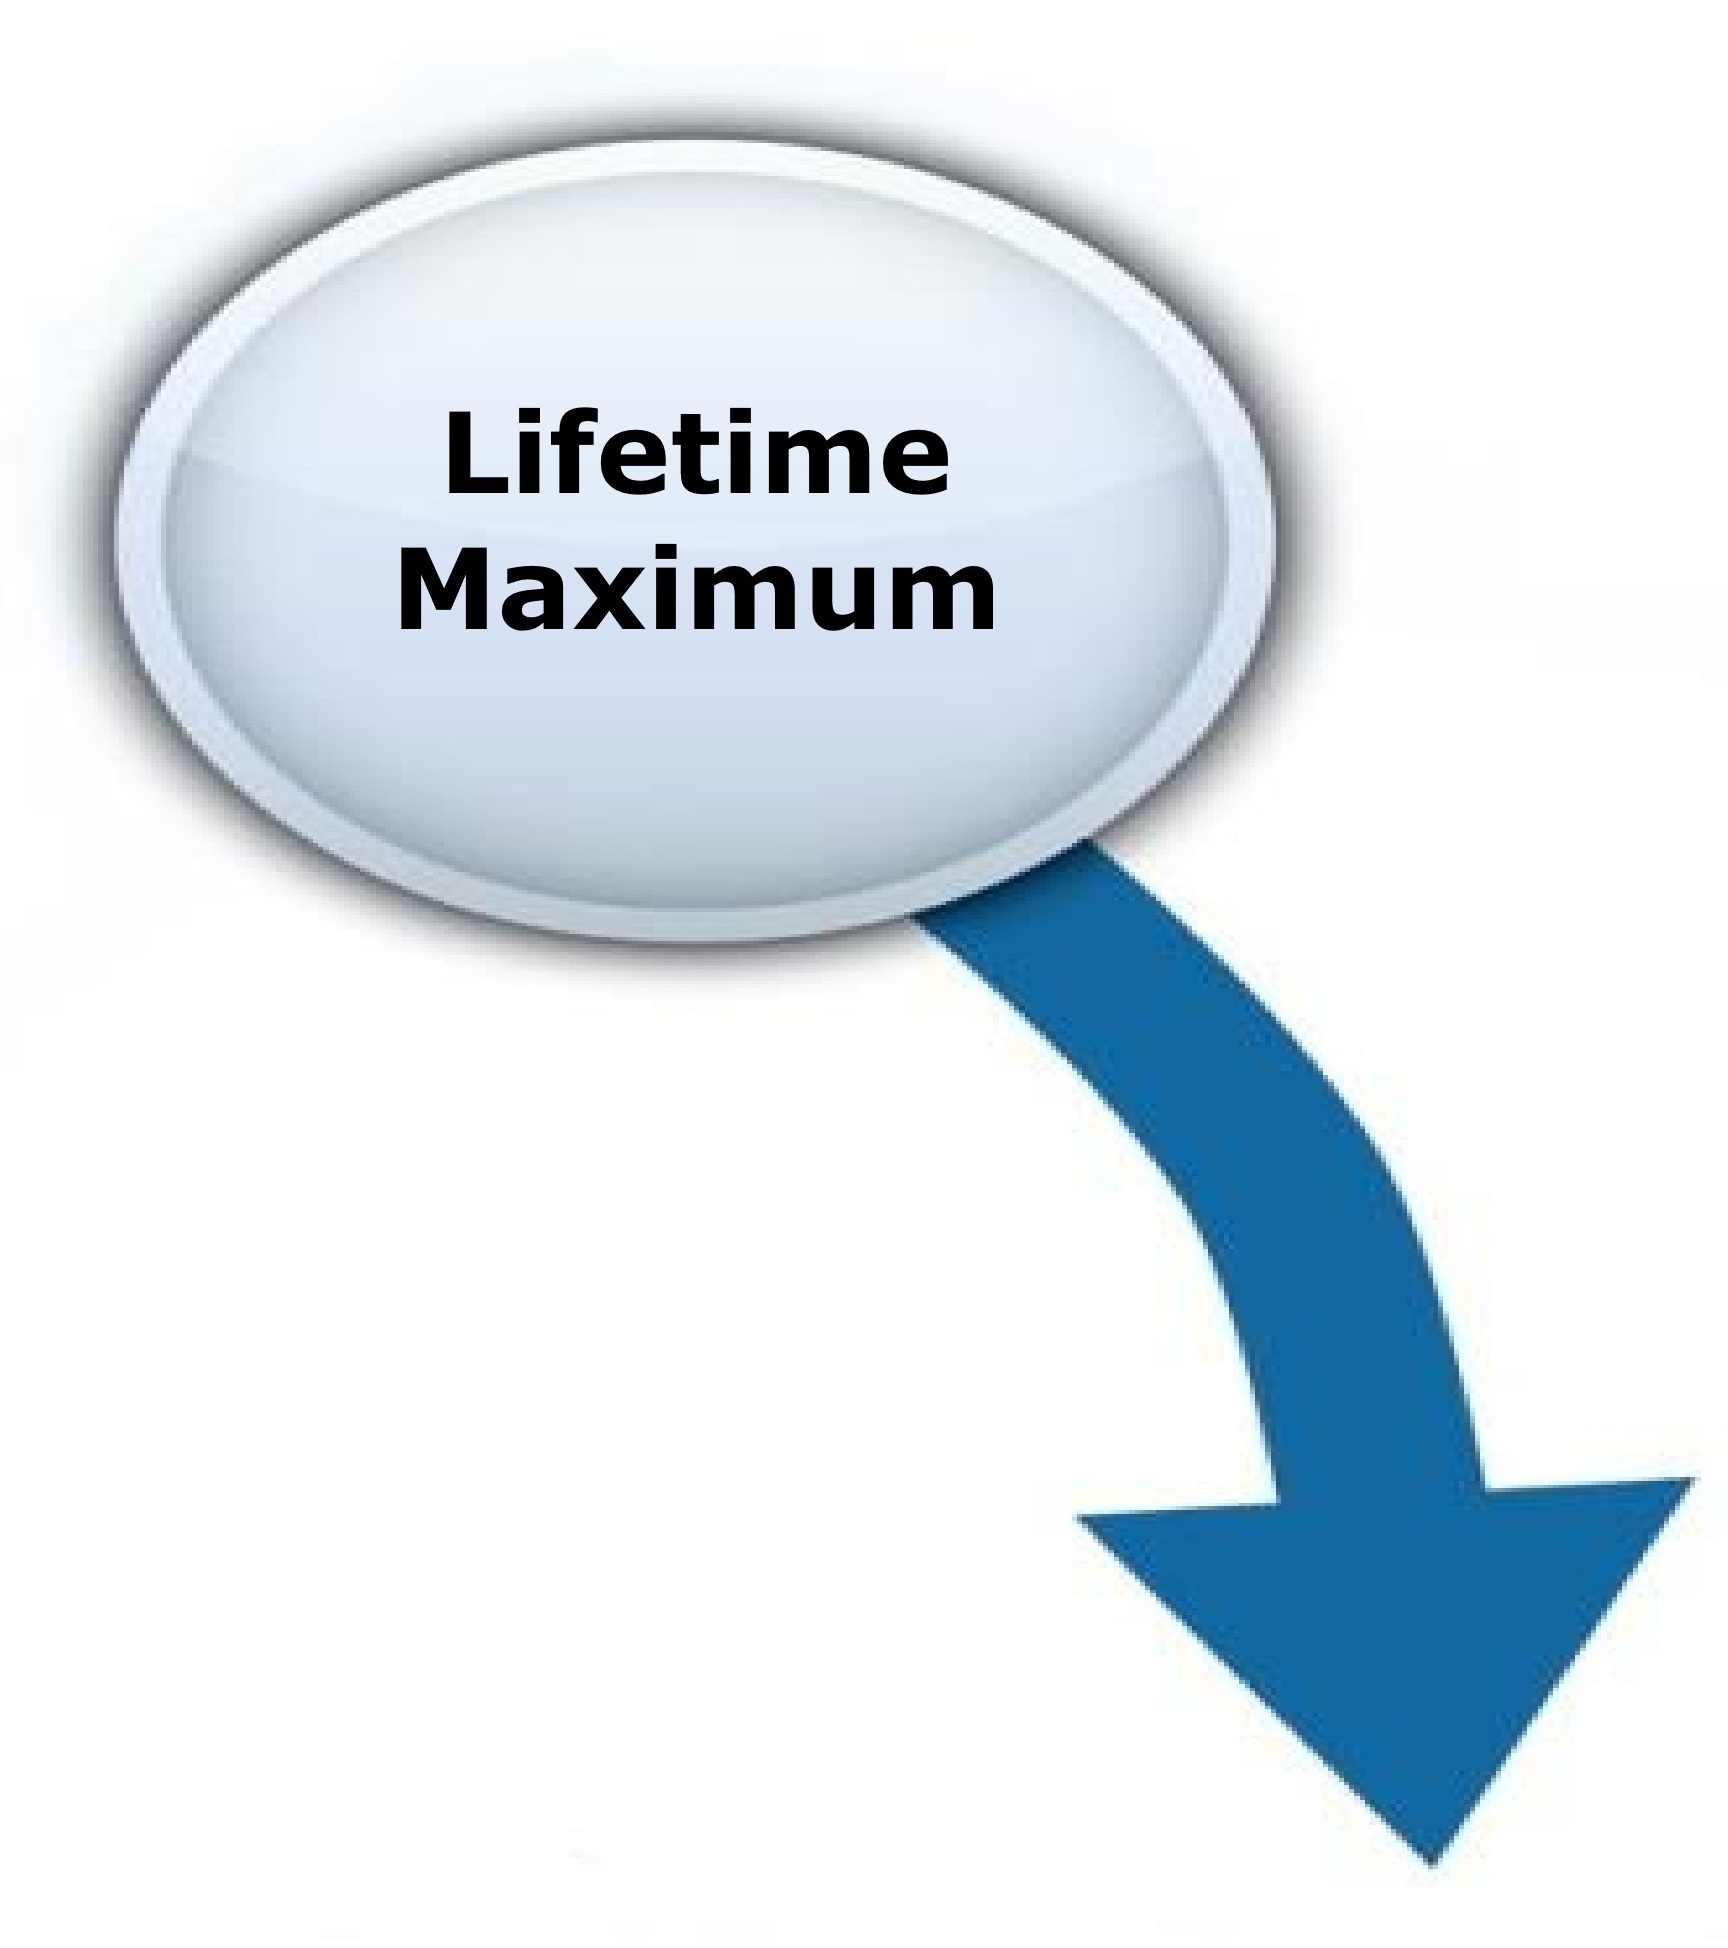 long-term care insurance lifetime maximum image